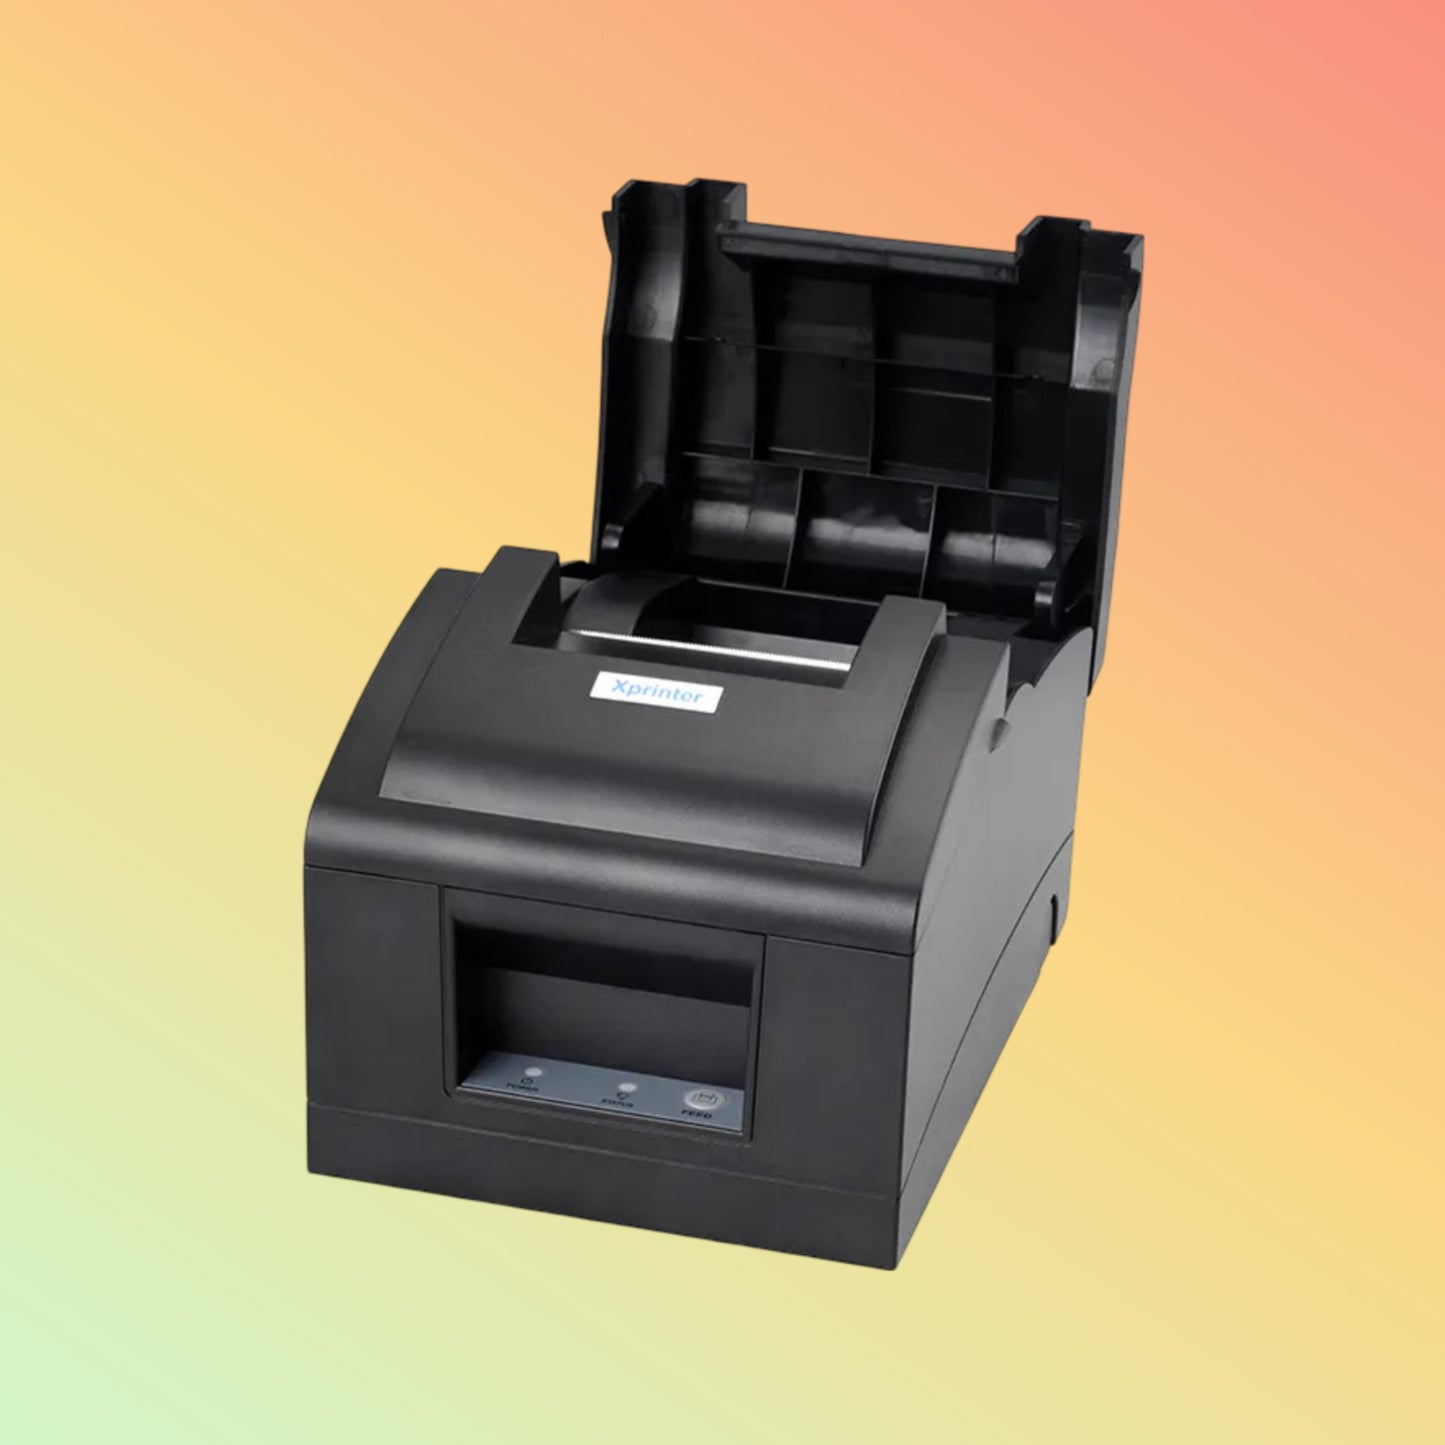 Xprinter XP-C76IIN – High-Performance Receipt Printer